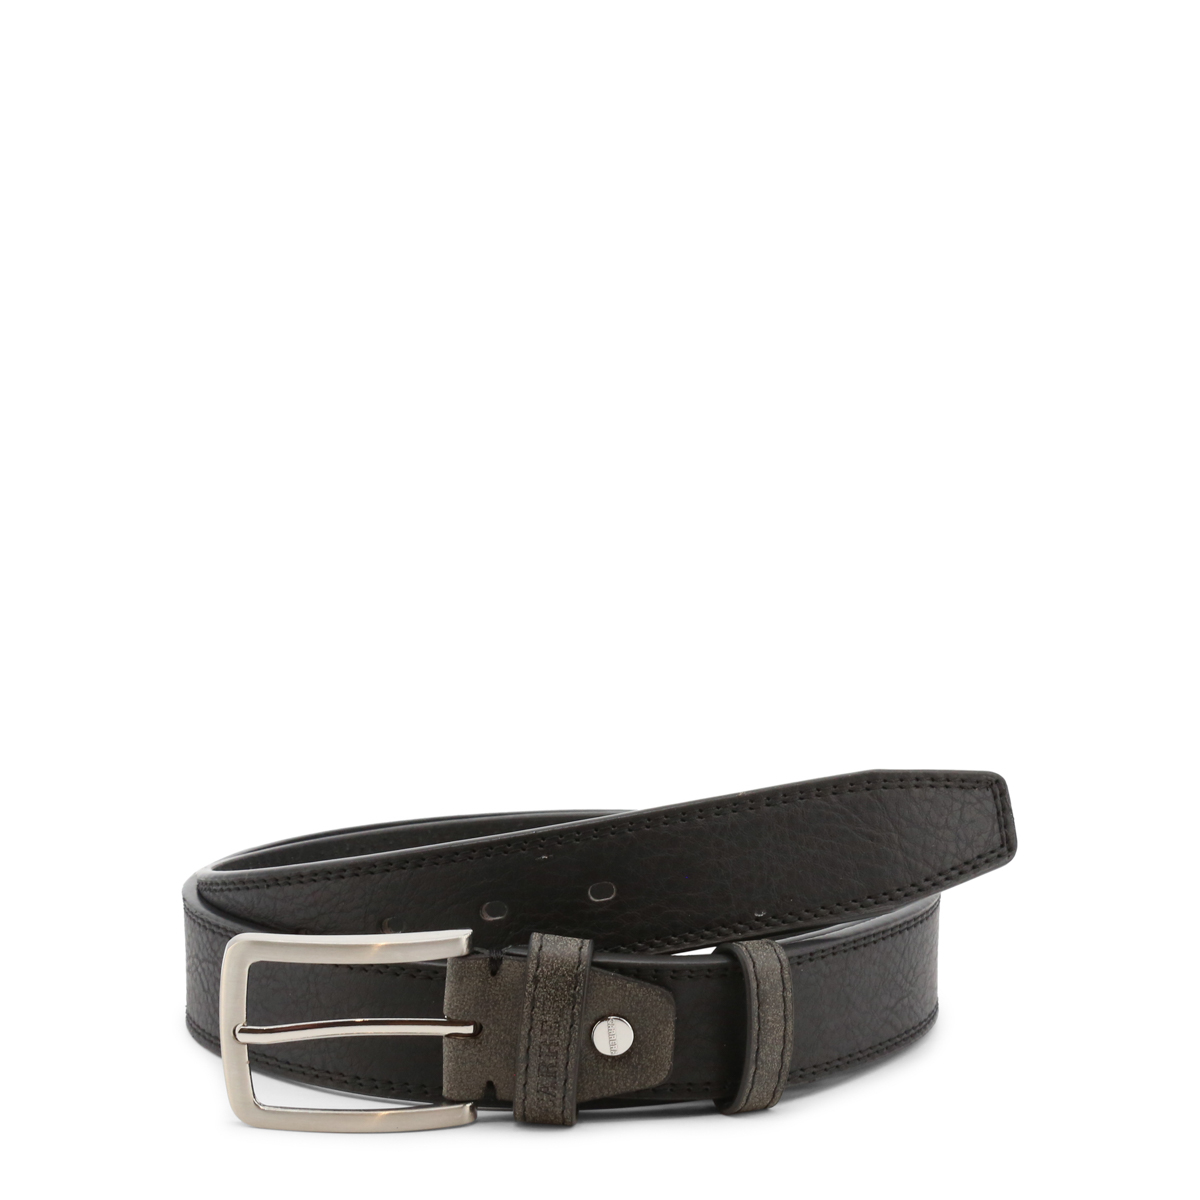 Carrera Jeans Black Belts for Men - GROUND-CB7721